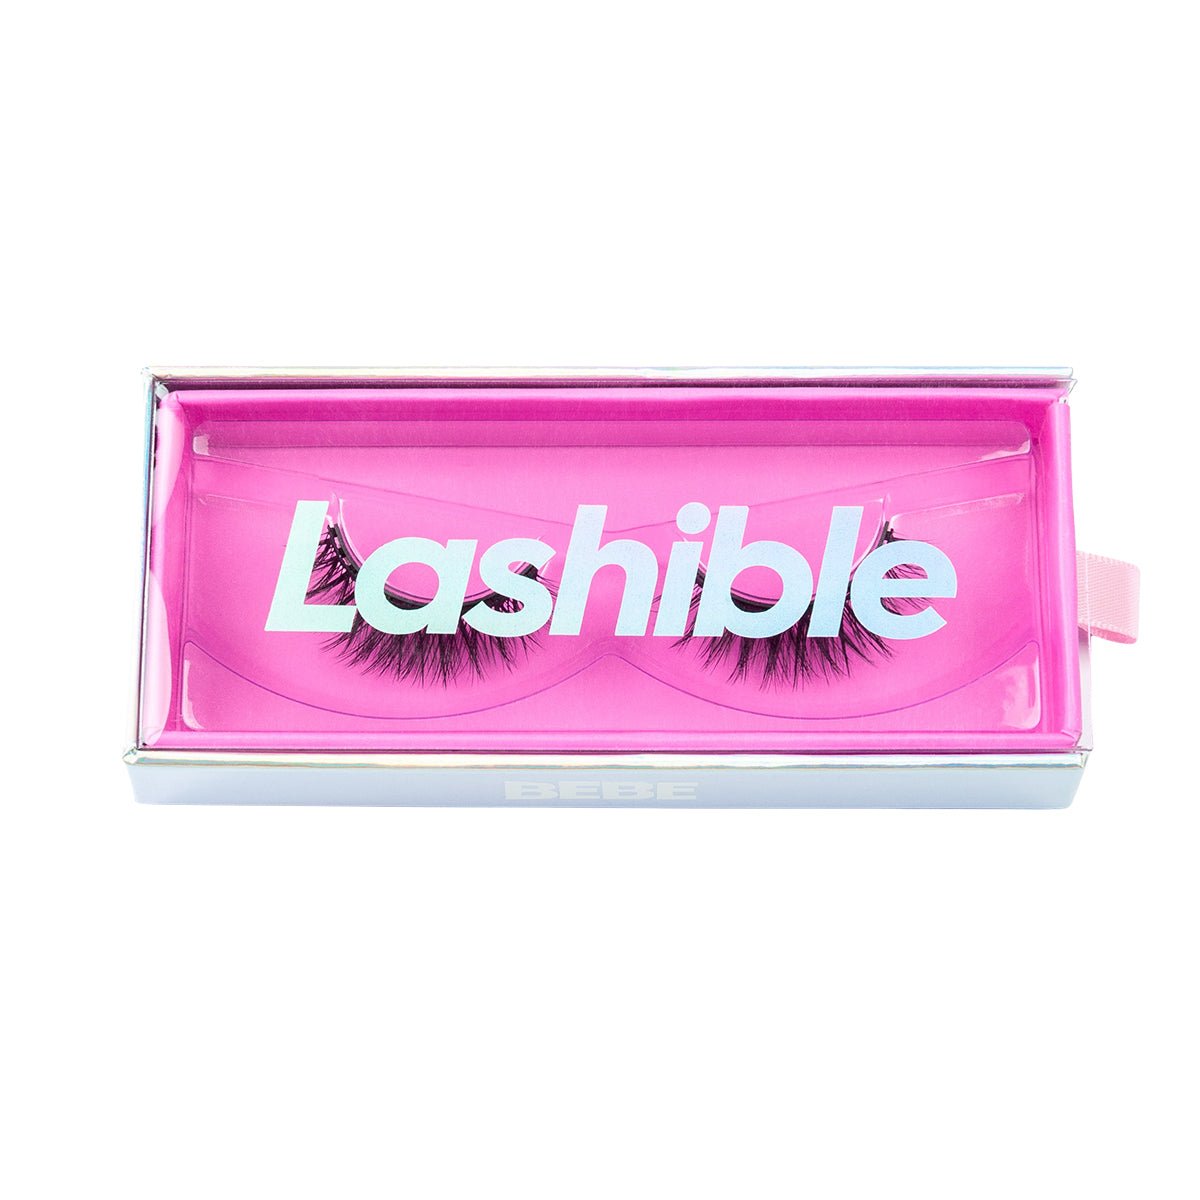 Bebe Lashes Only - Lashible